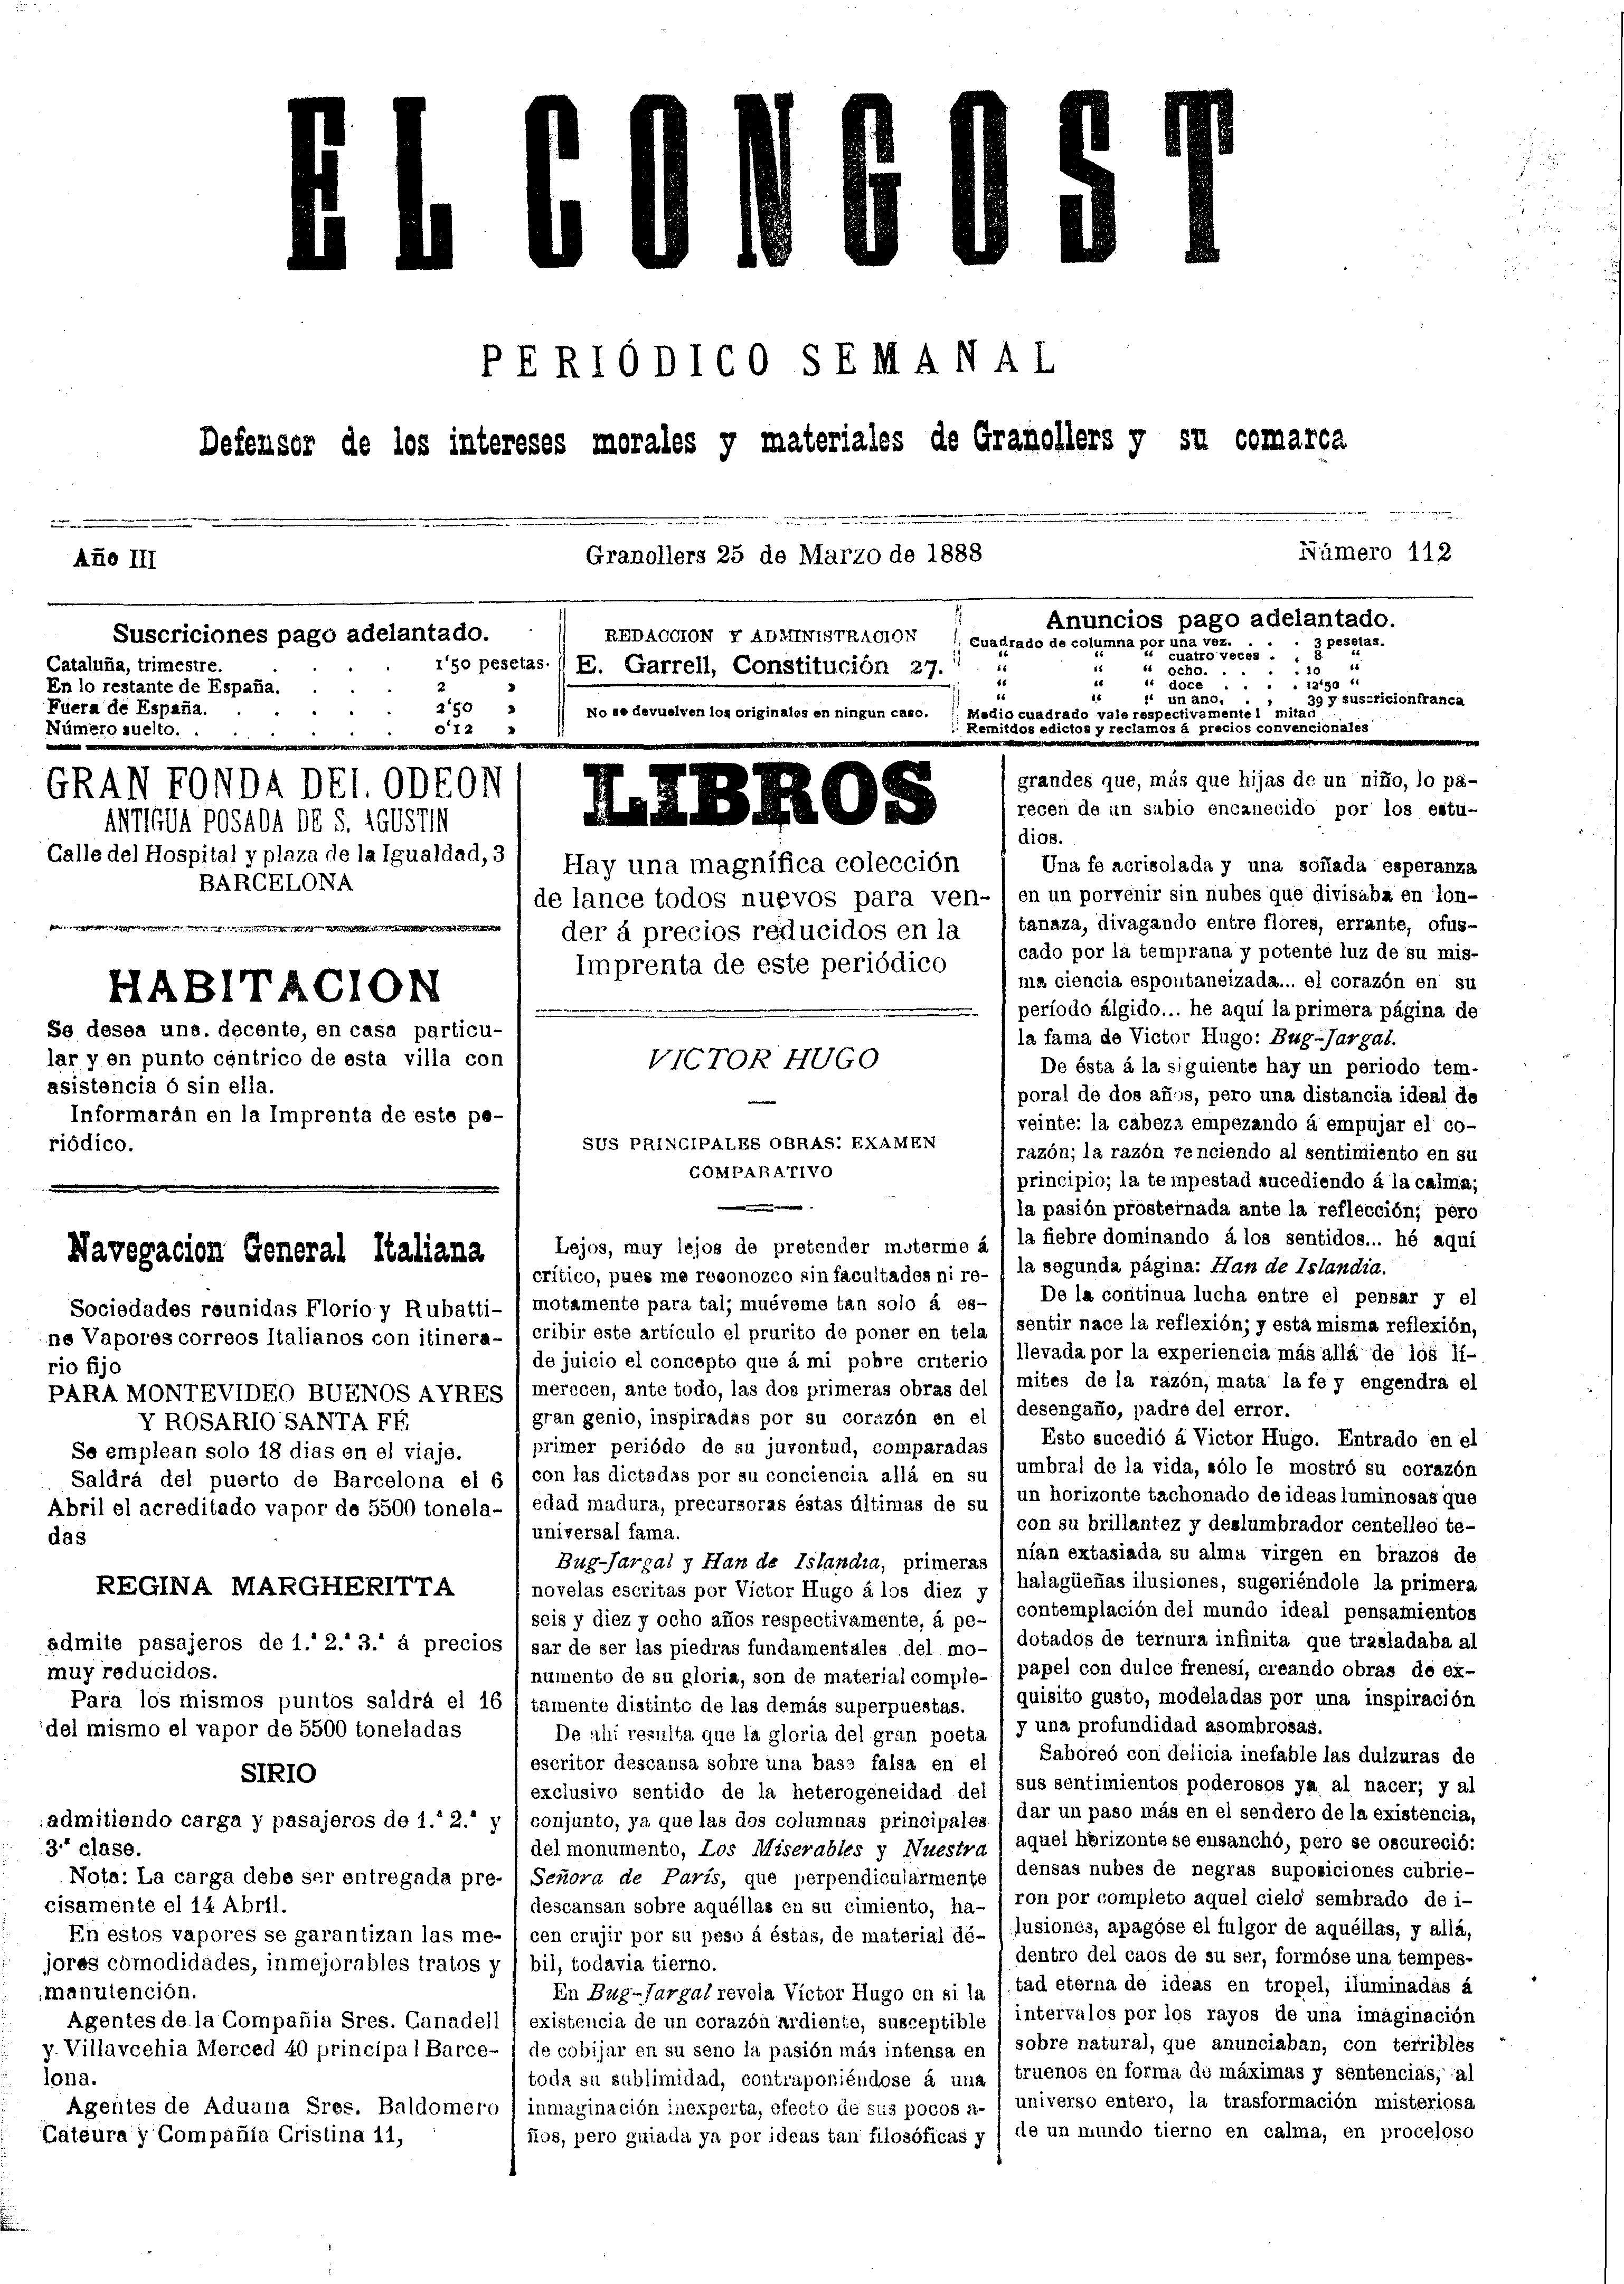 El Congost, 25/3/1888 [Exemplar]